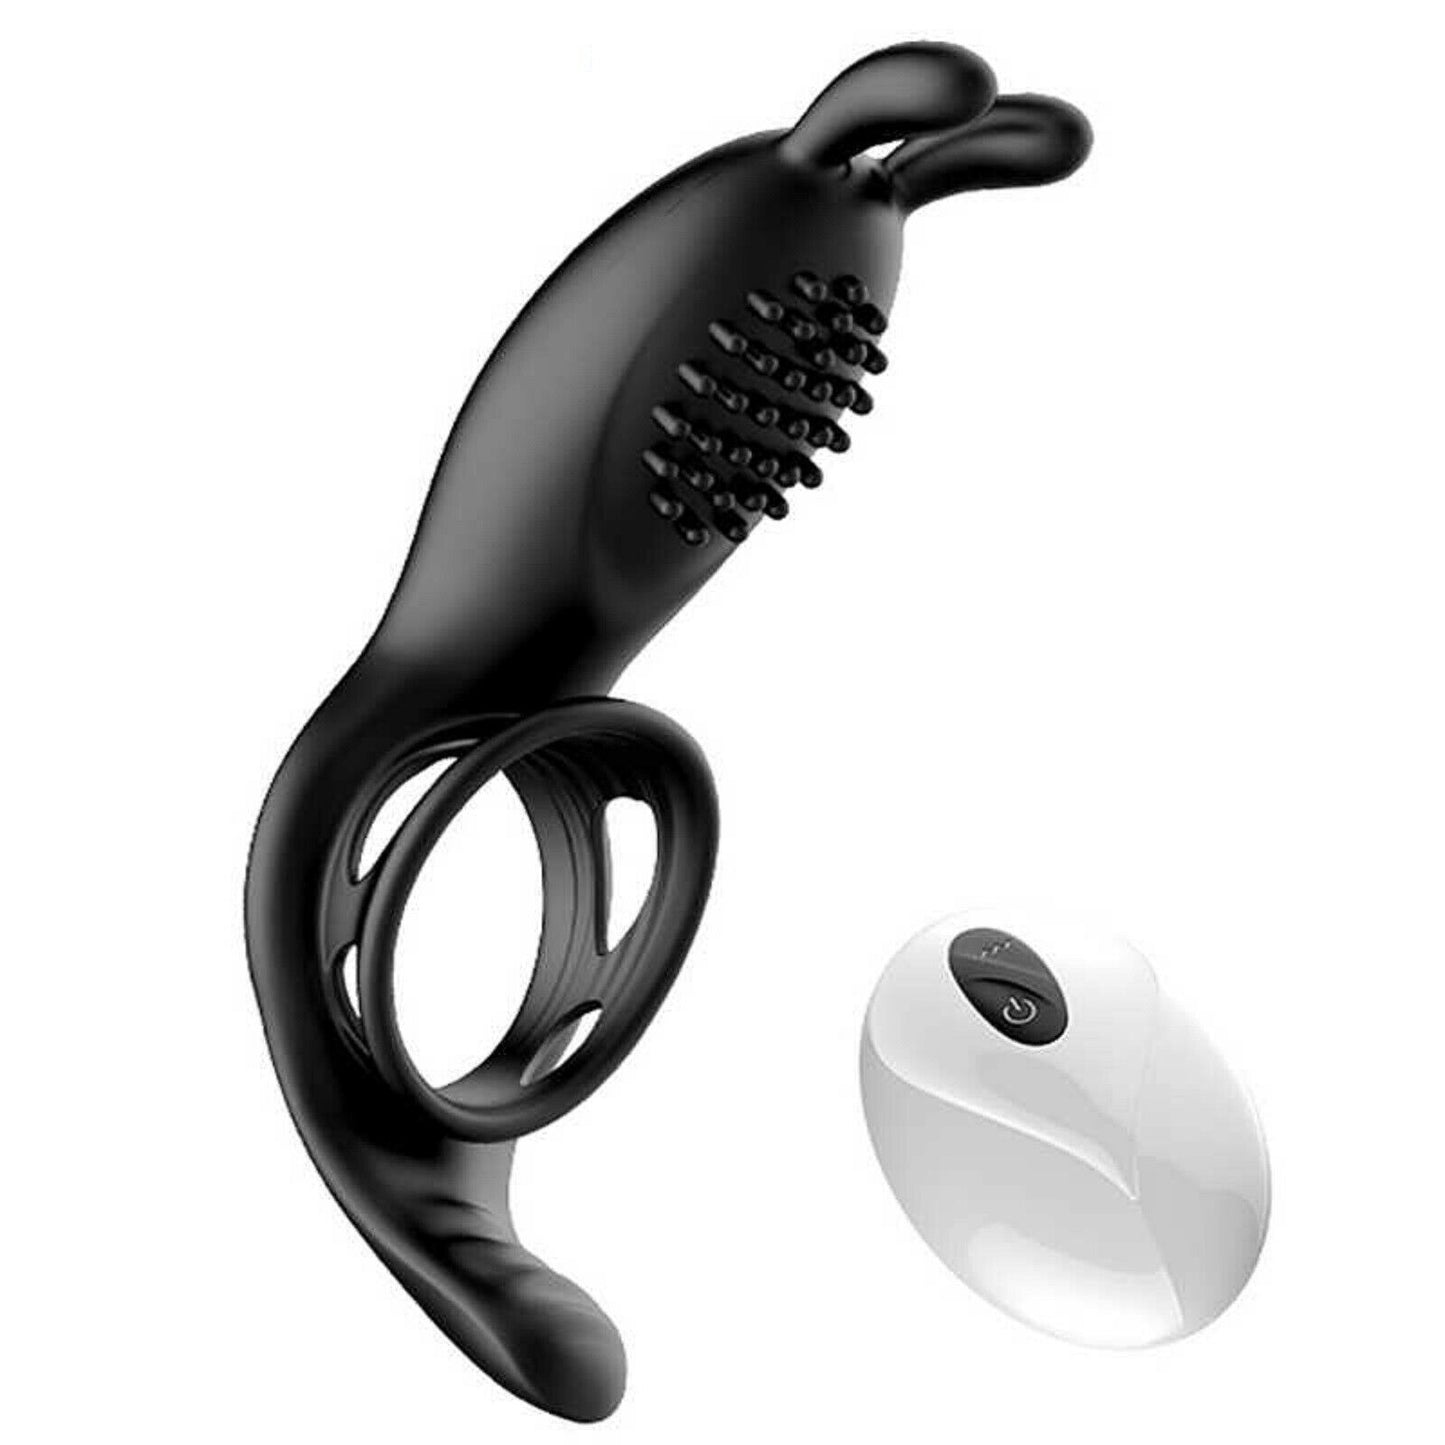 Vibrating Cock Ring Penis USB Dildo Couples Vibe Clit Vibrator Wearable Sex Toy